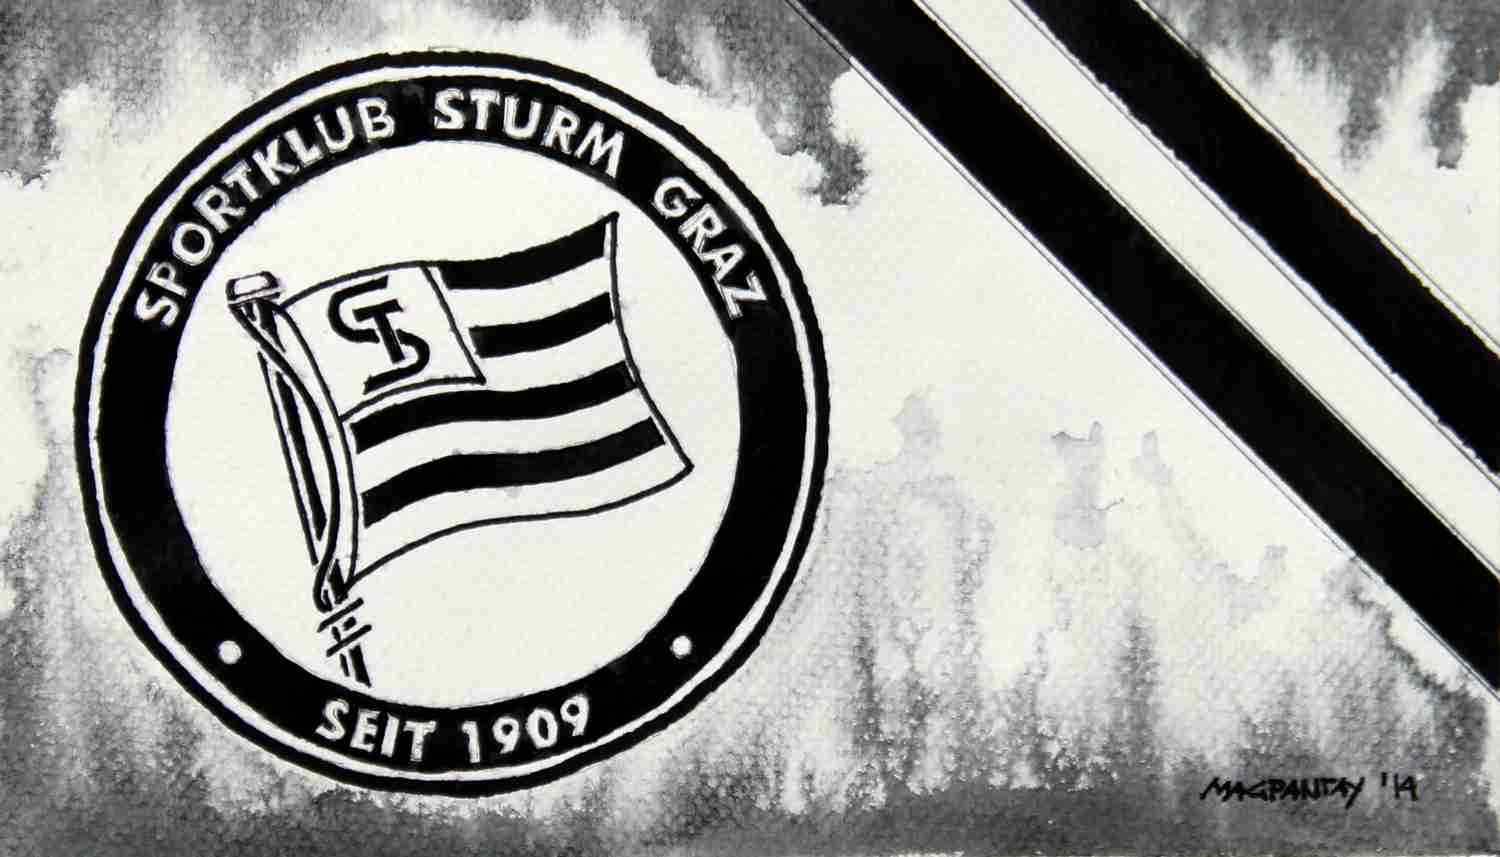 _SK Sturm Graz - Wappen mit Farben